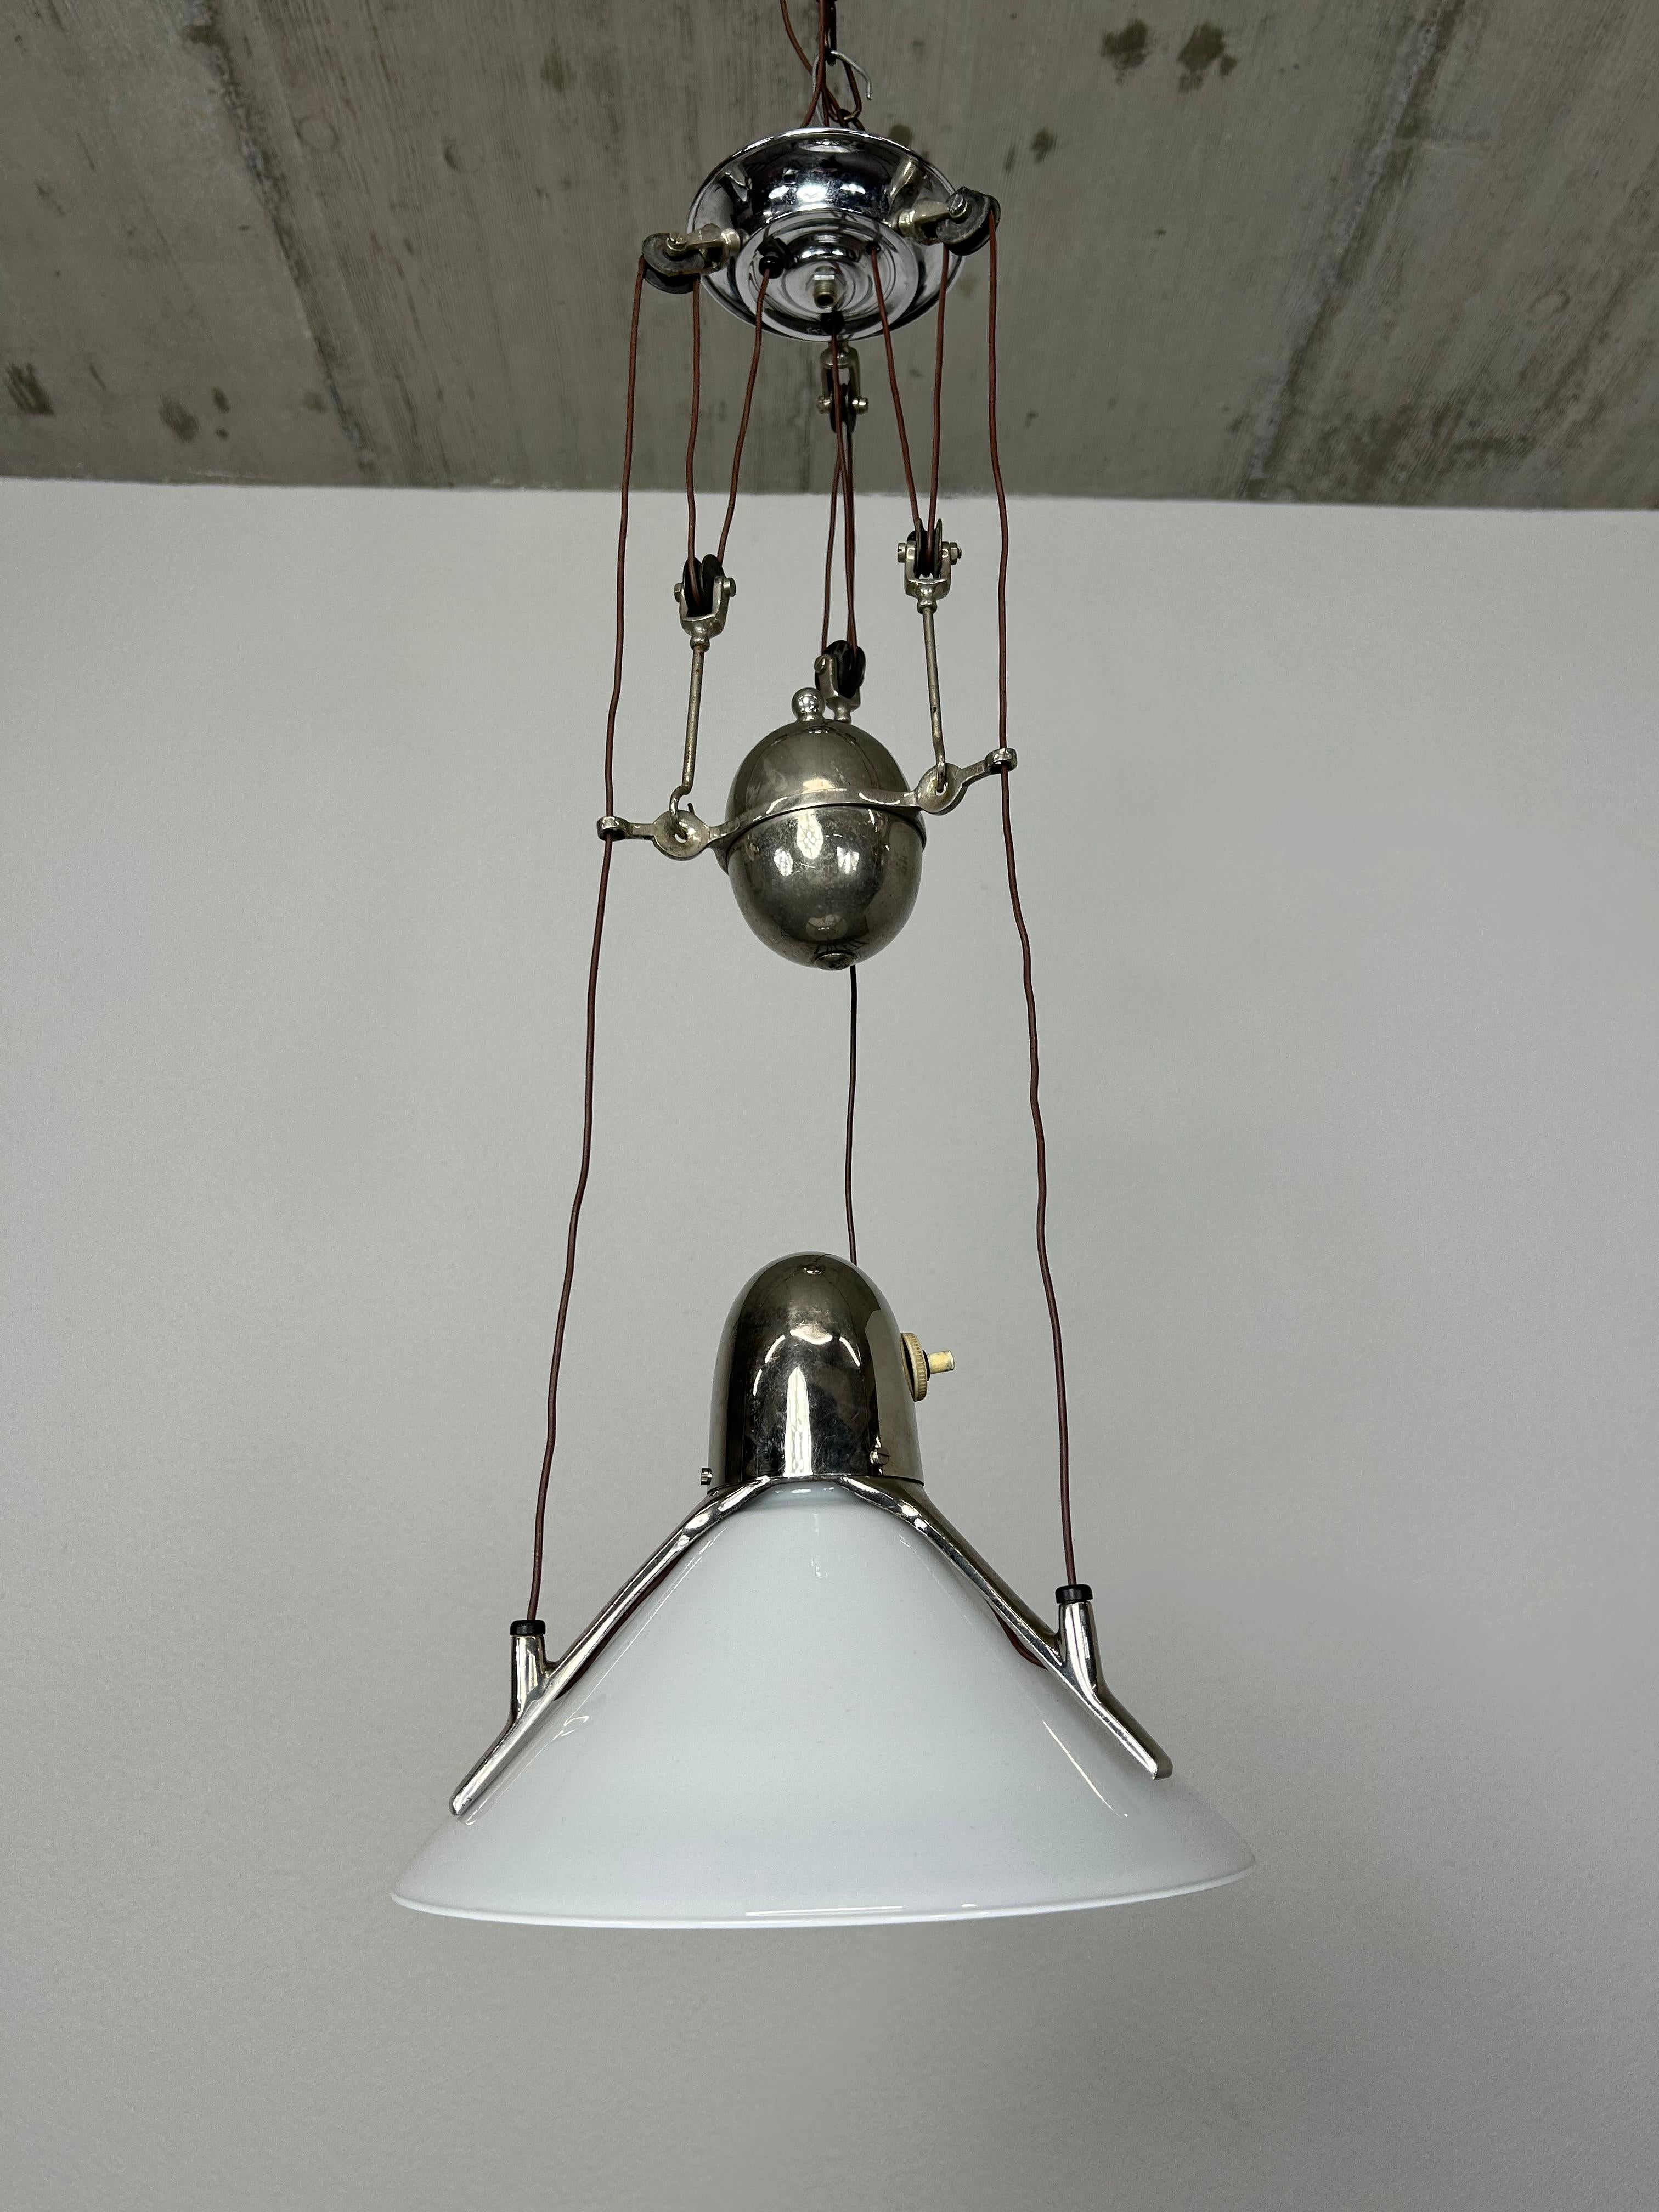 Art deco adjustable hanging lamp in very nice original condition.